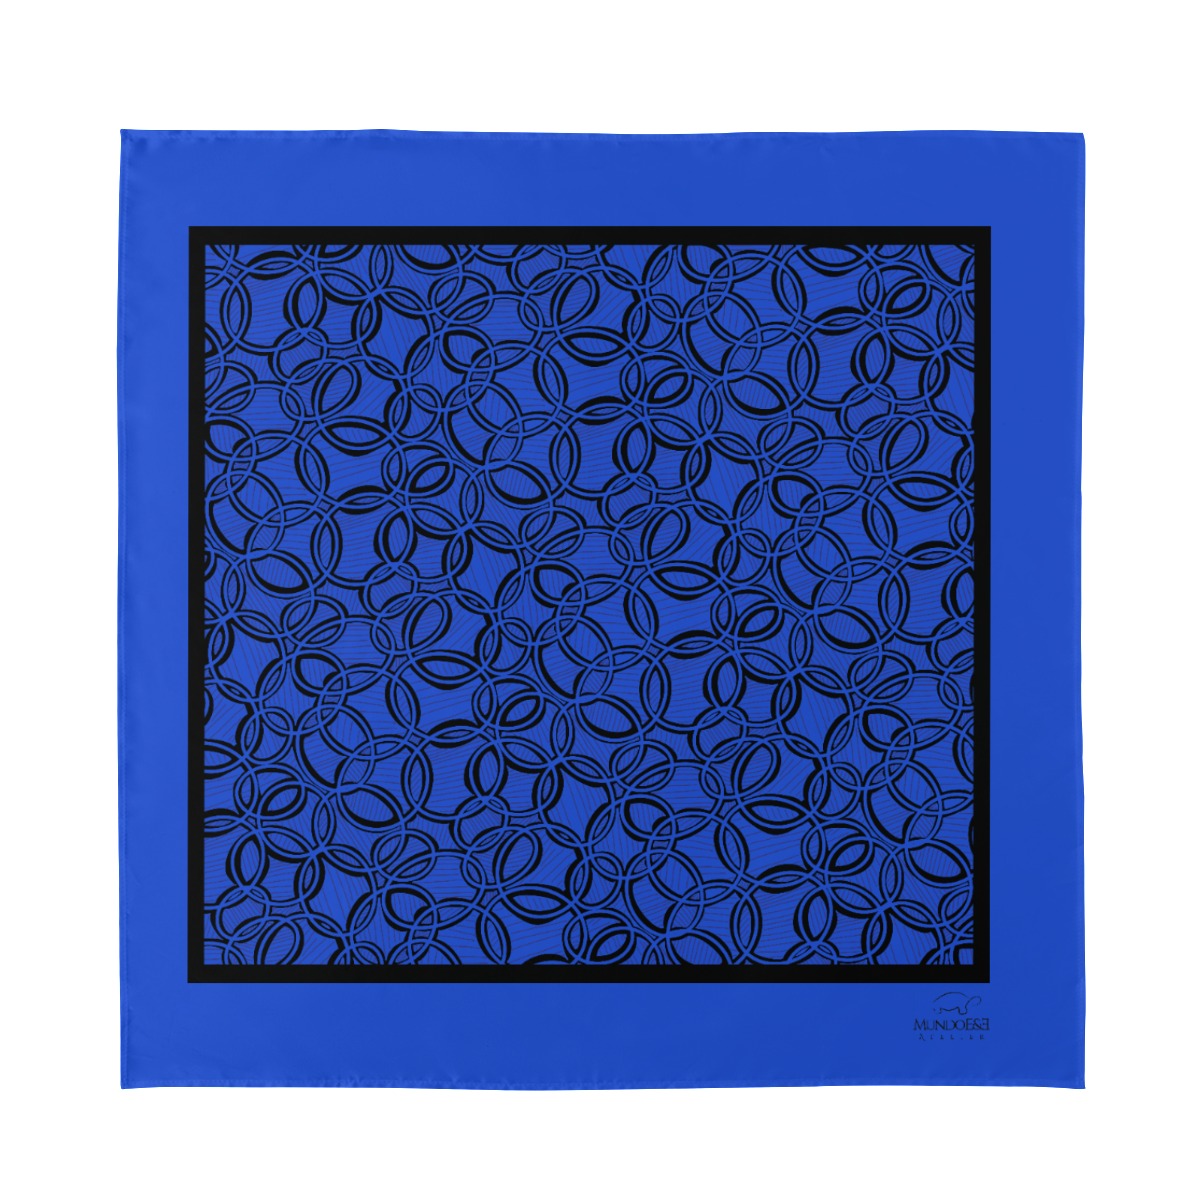 Geometric Blue & Black Geometric Silk Scarf. Design hand-painted by the Designer Maria Alejandra Echenique